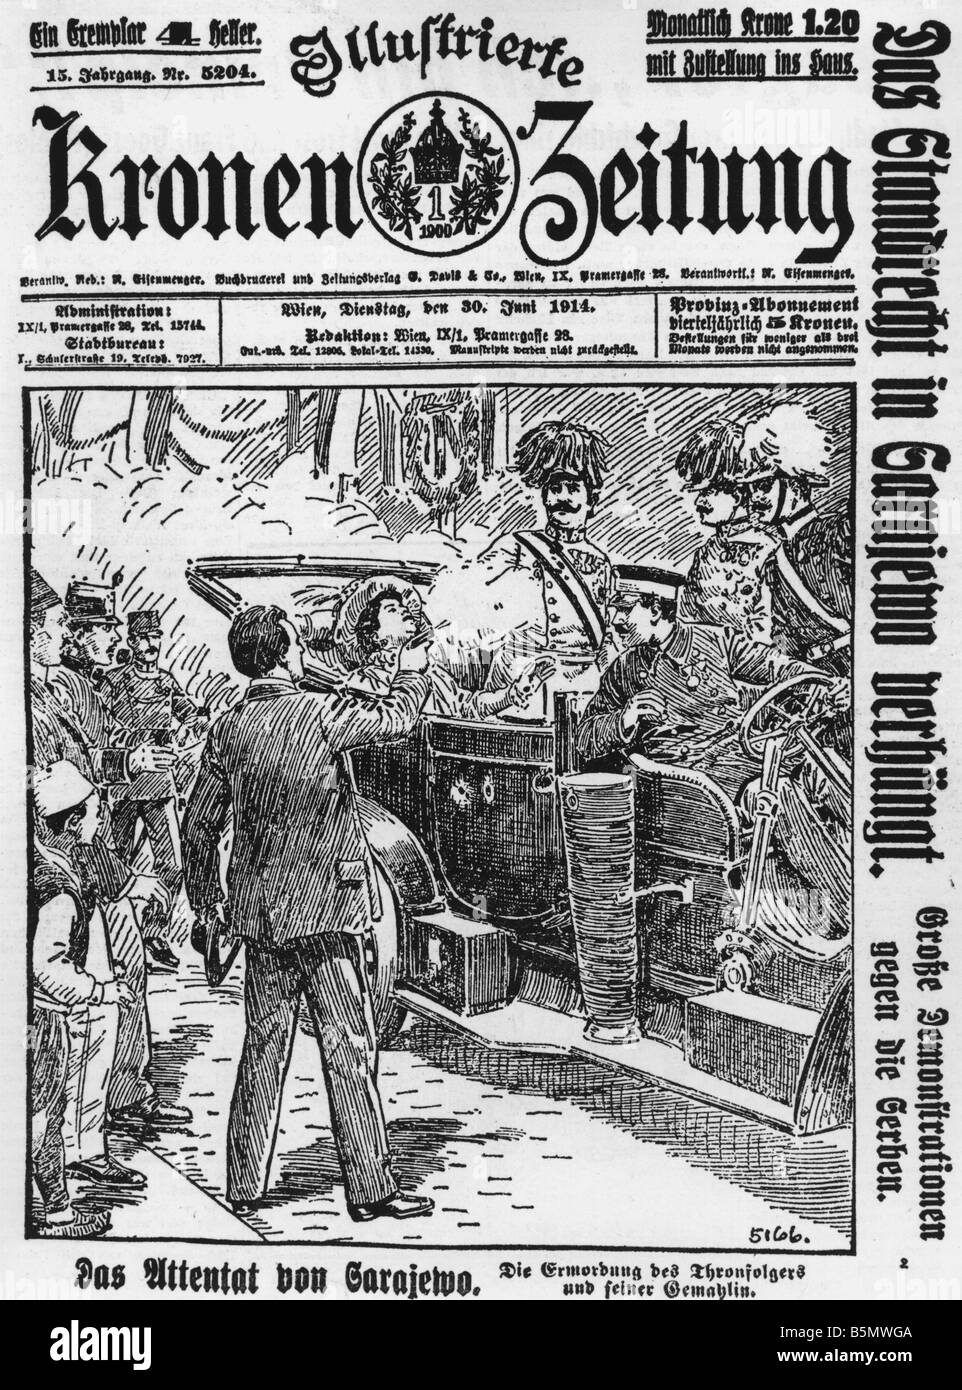 9OE 1914 6 28 A6 E Assass of Franz Ferdinand in Sarajevo Prehistory of World War 1 Assassinati on of Austr Hung heir to the thro Stock Photo